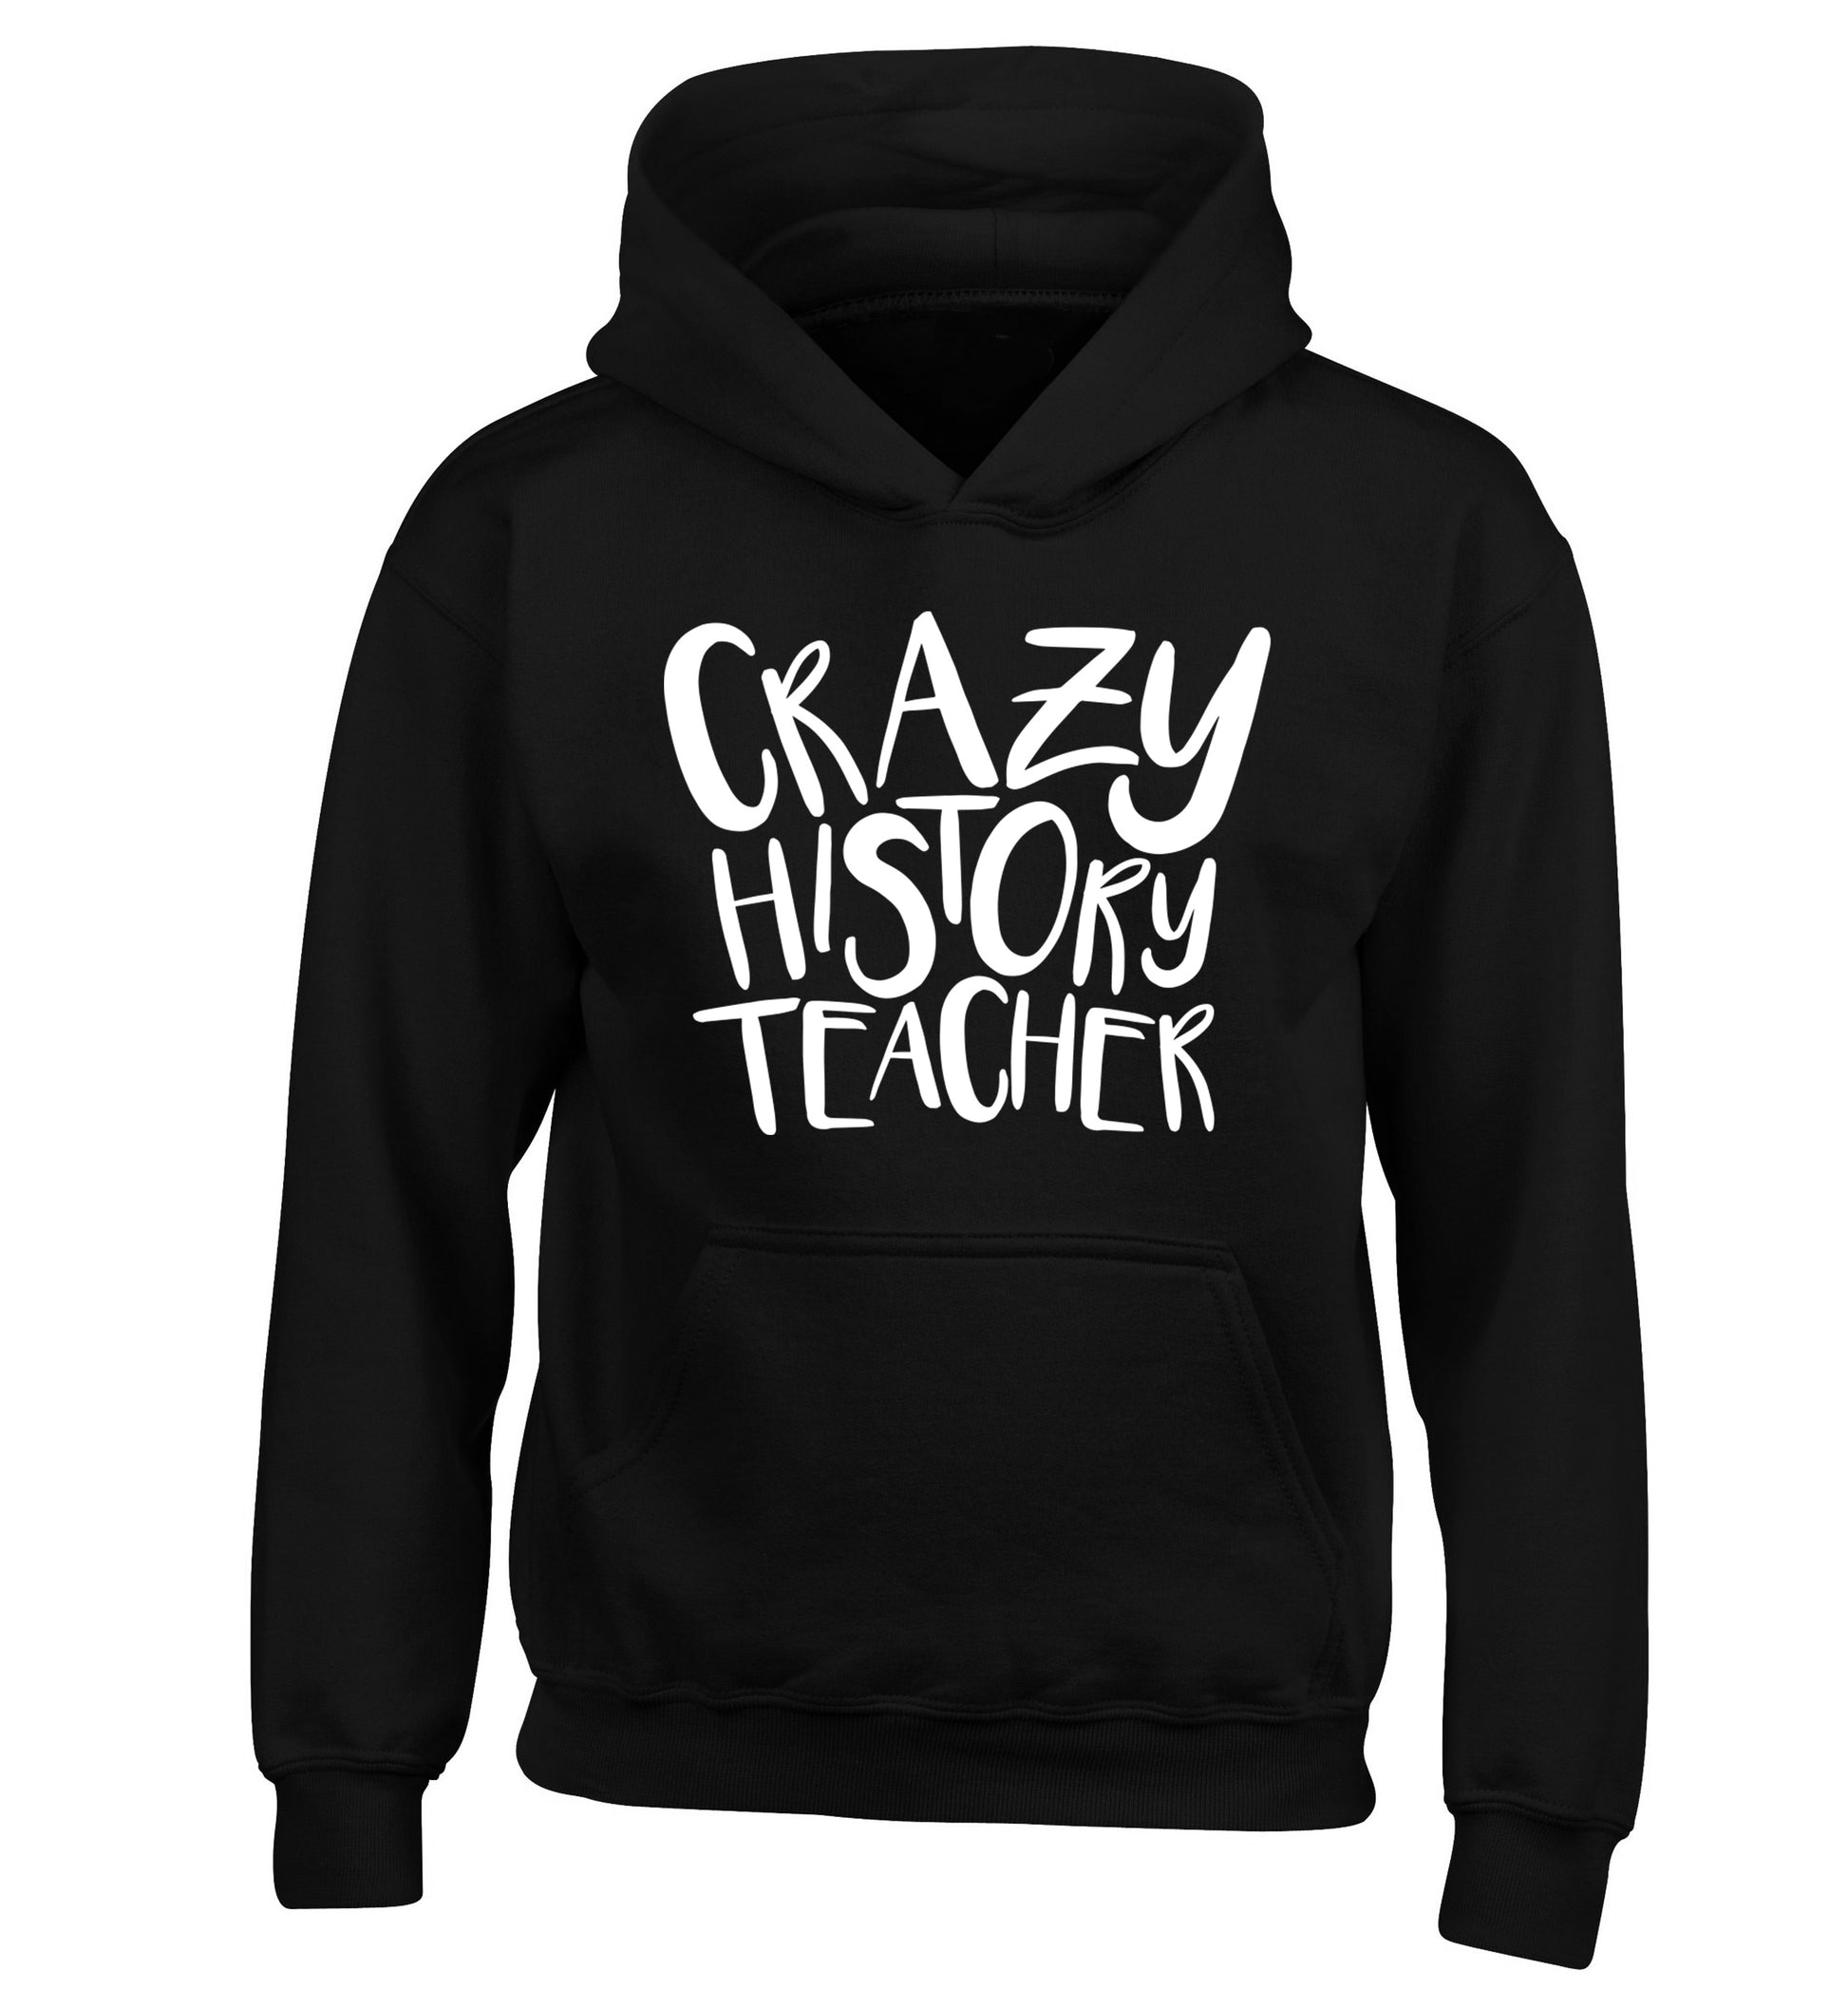 Crazy history teacher children's black hoodie 12-13 Years